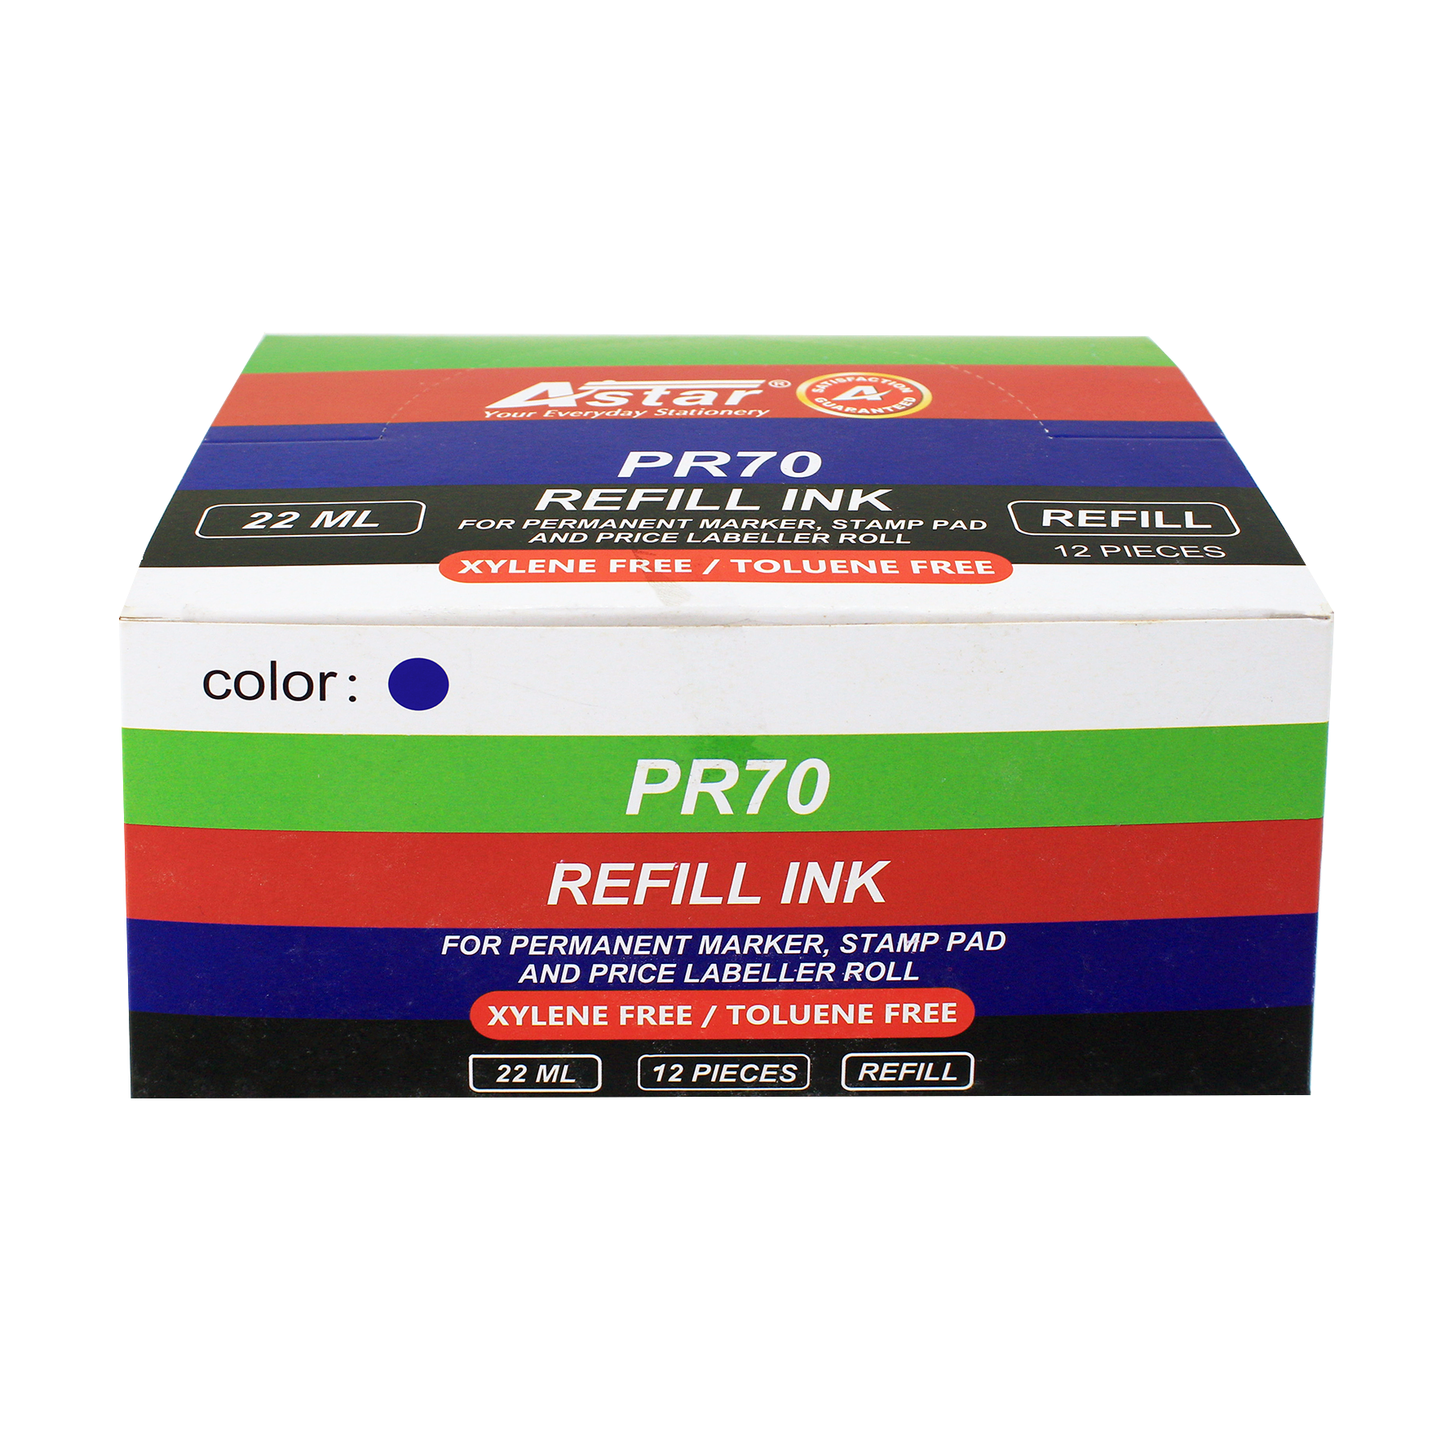 PR70-BL - ASTAR  REFILL INK FOR PERMANENT MARKE